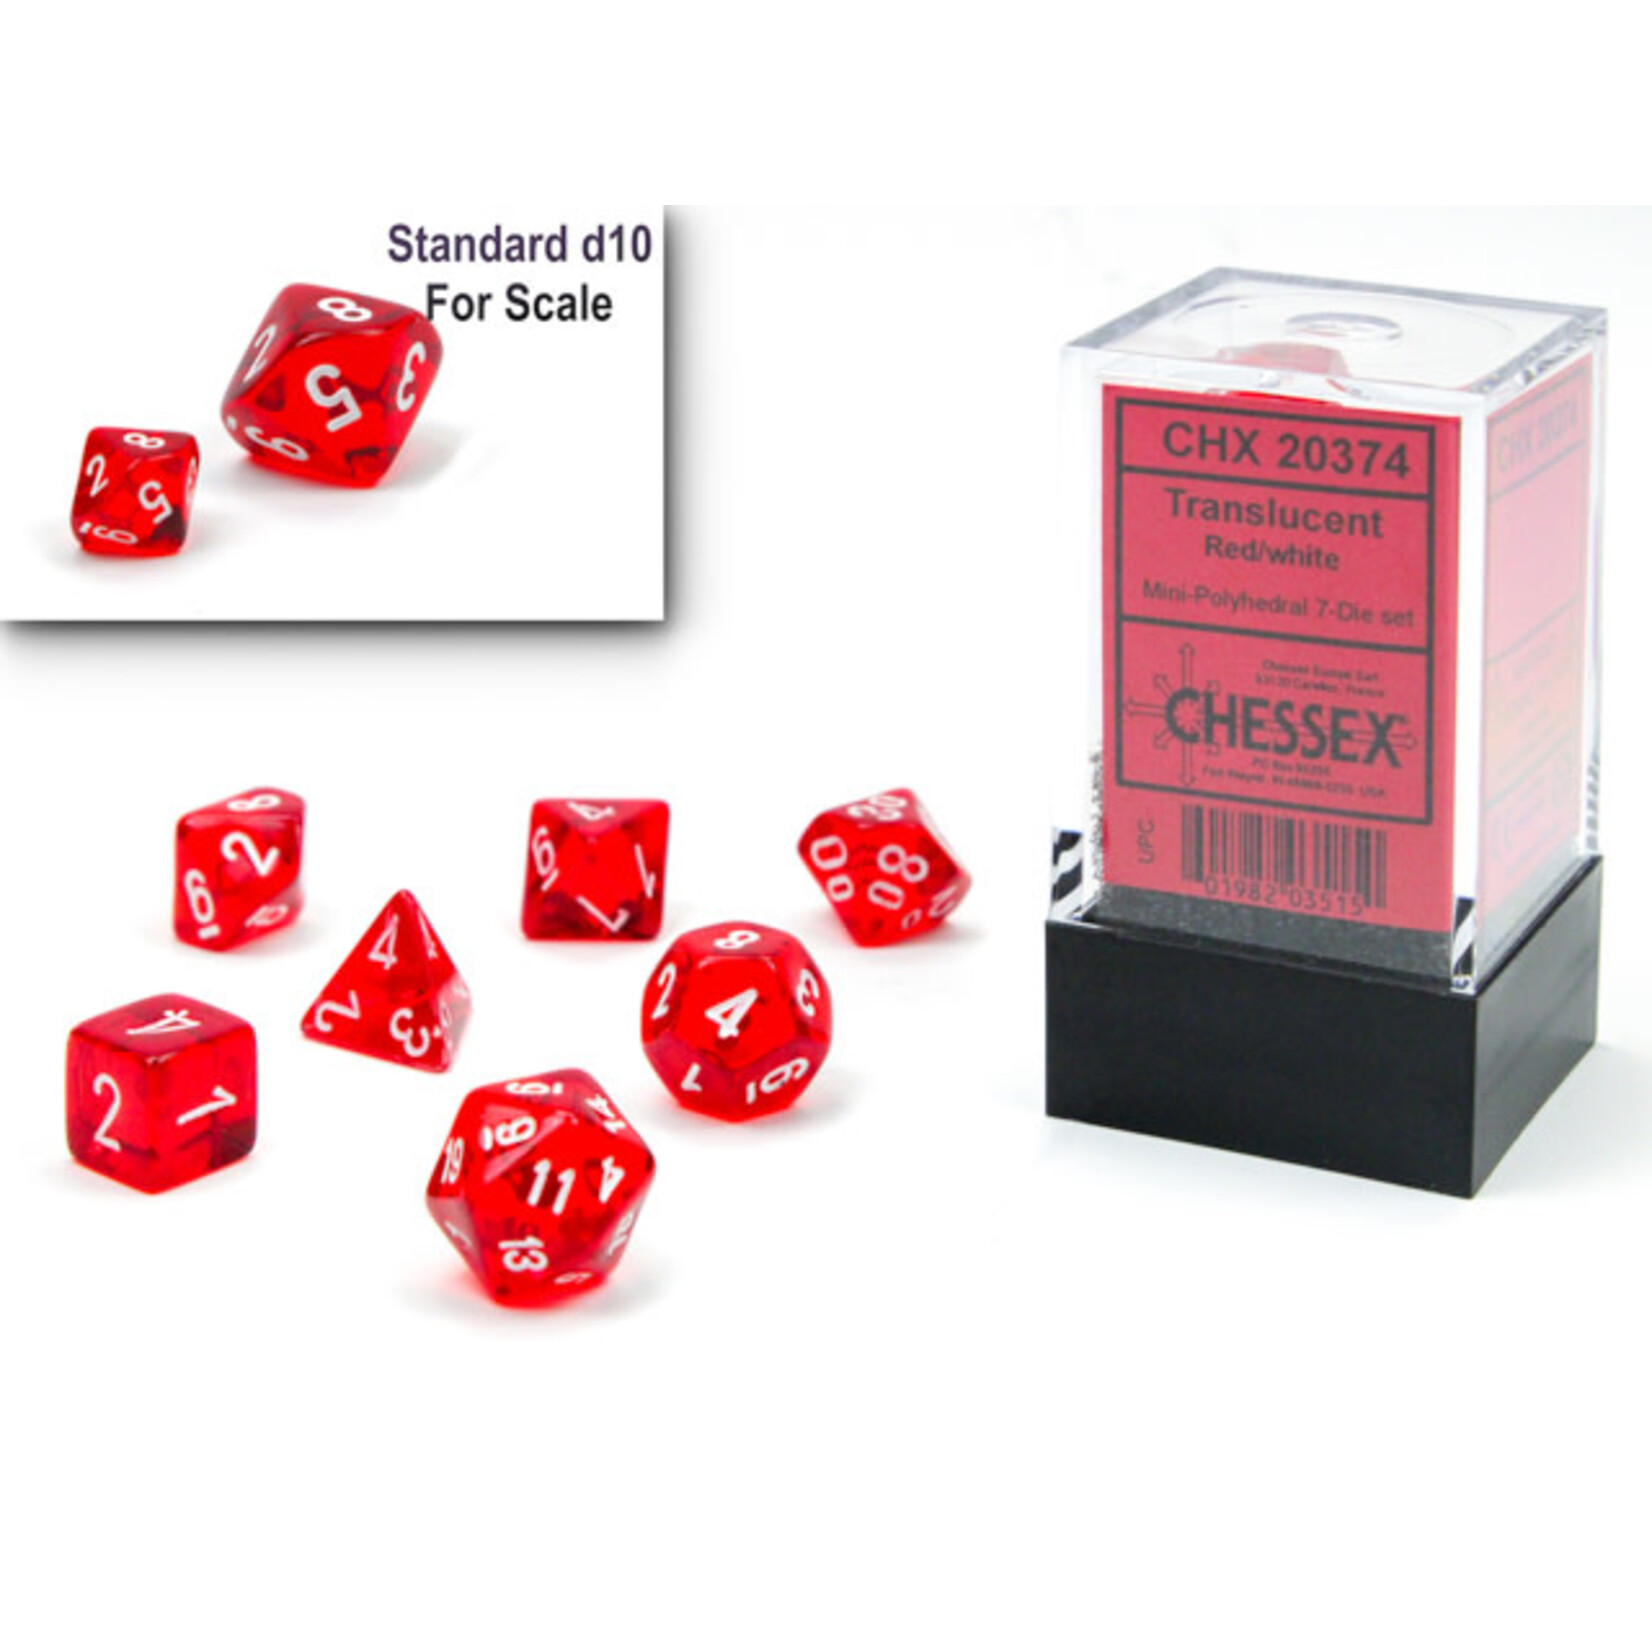 Chessex Translucent Red/white Mini-Polyhedral 7-Die Set